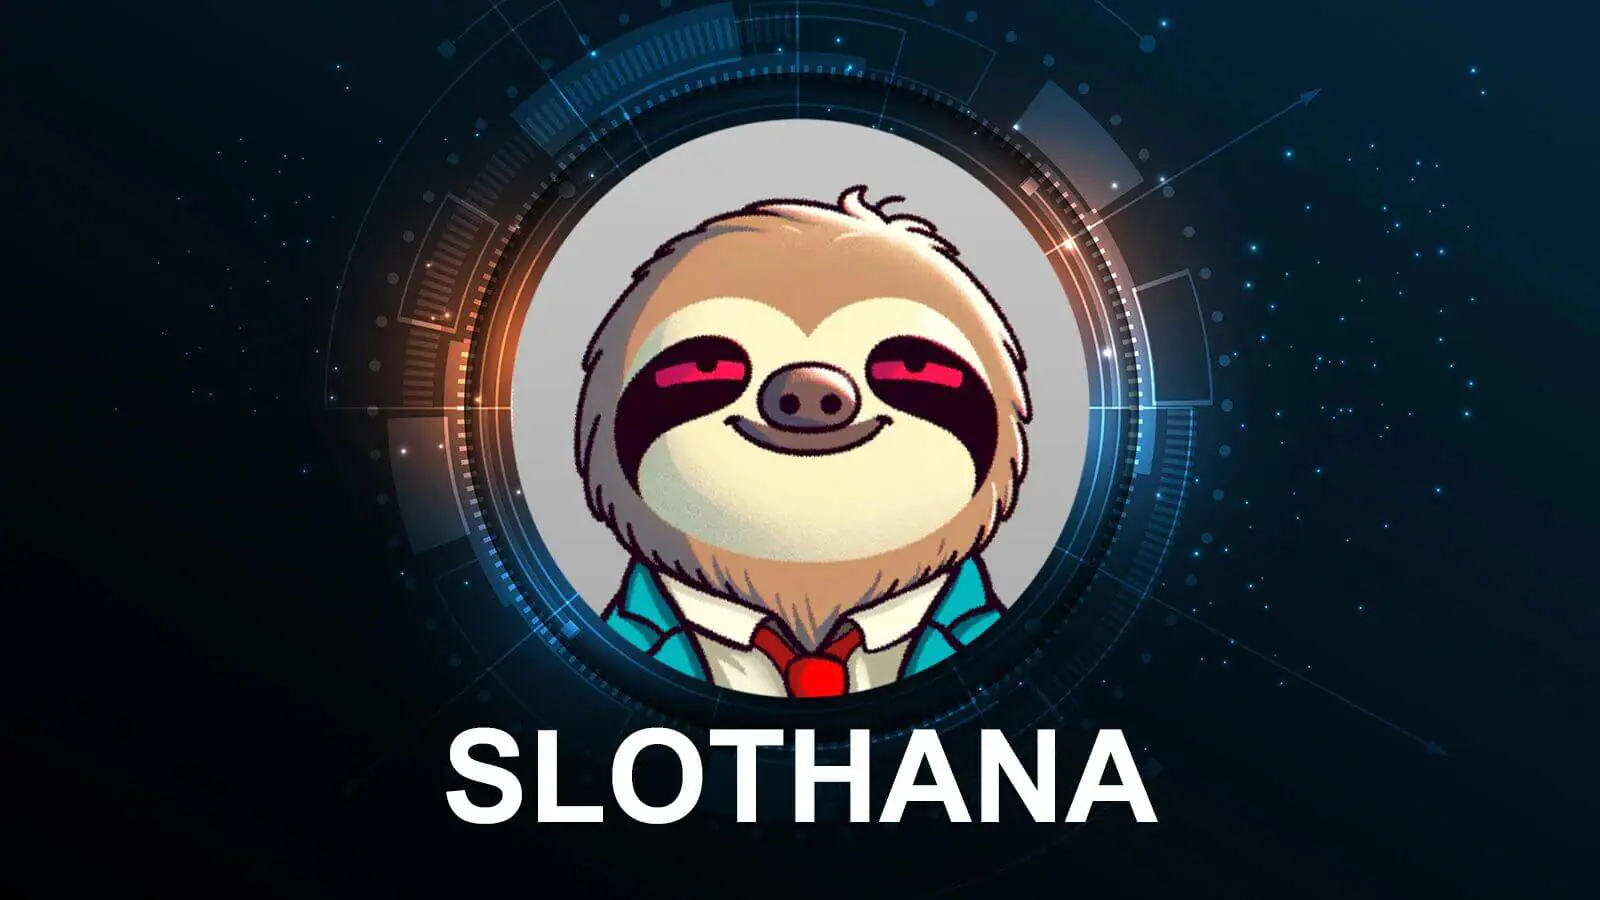 Slothana